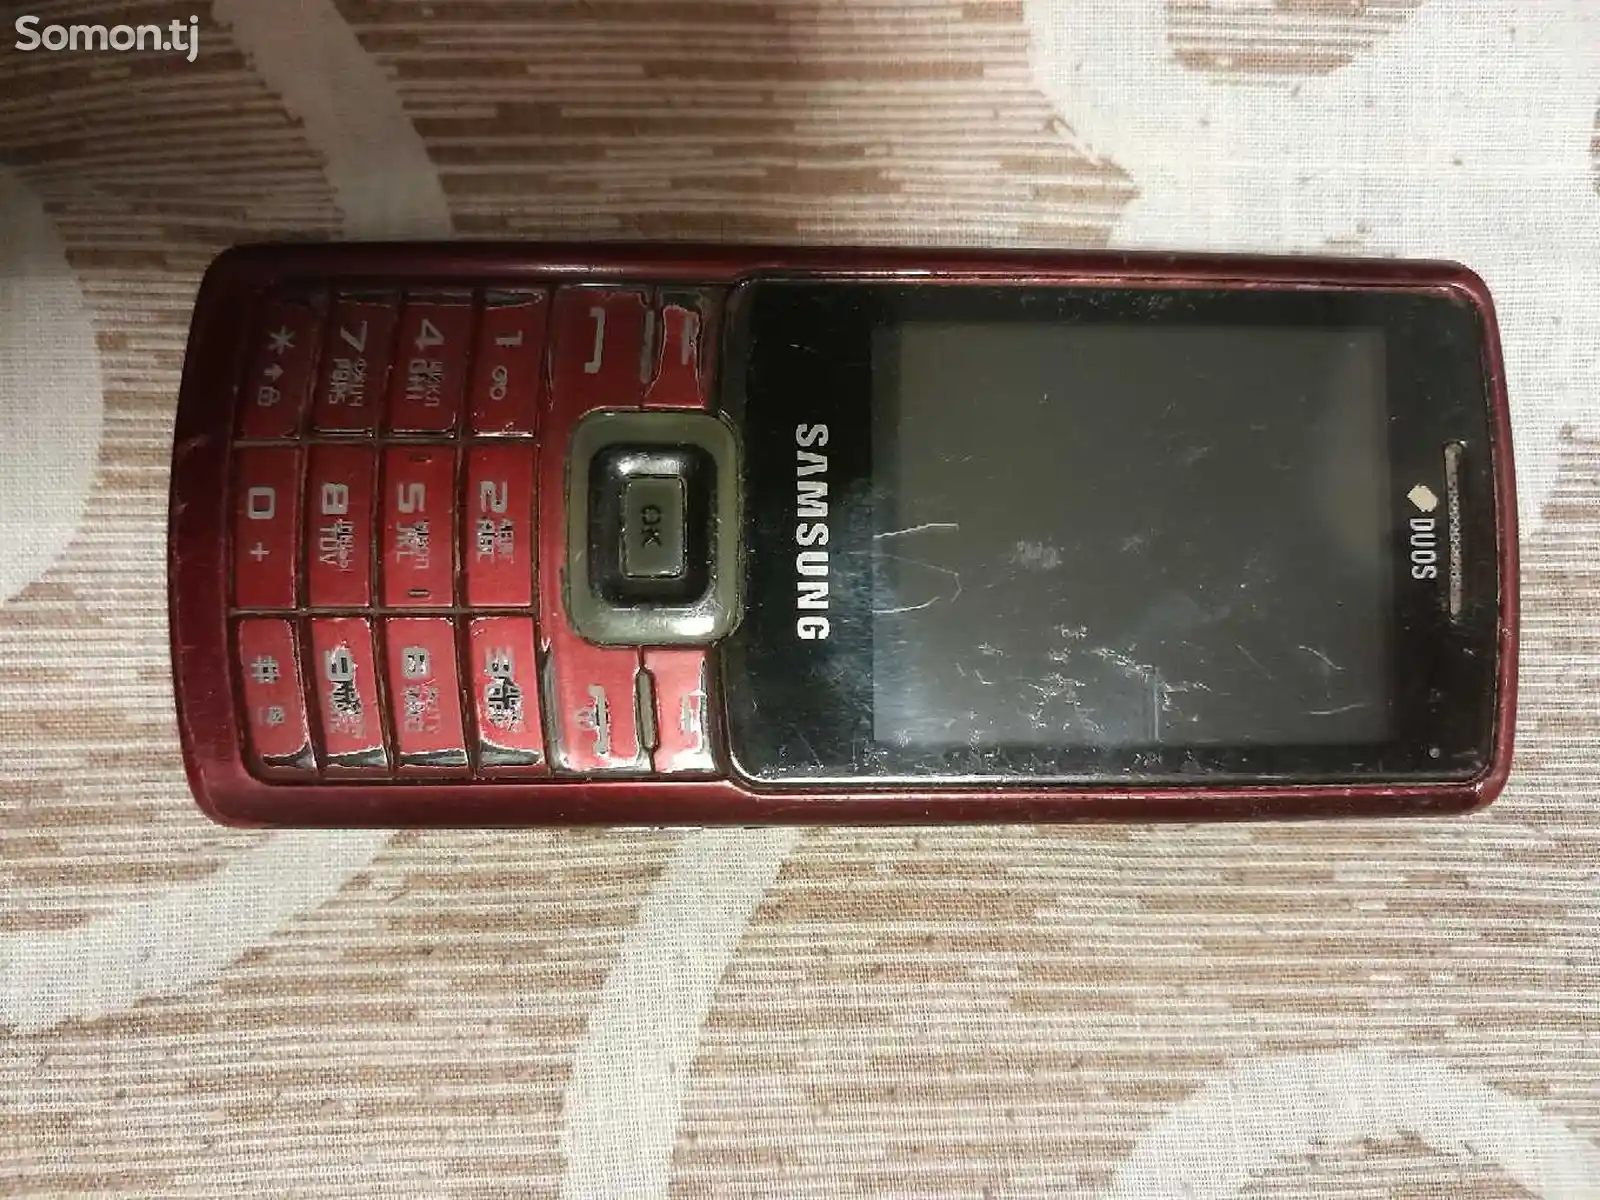 Телефон Samsung-4